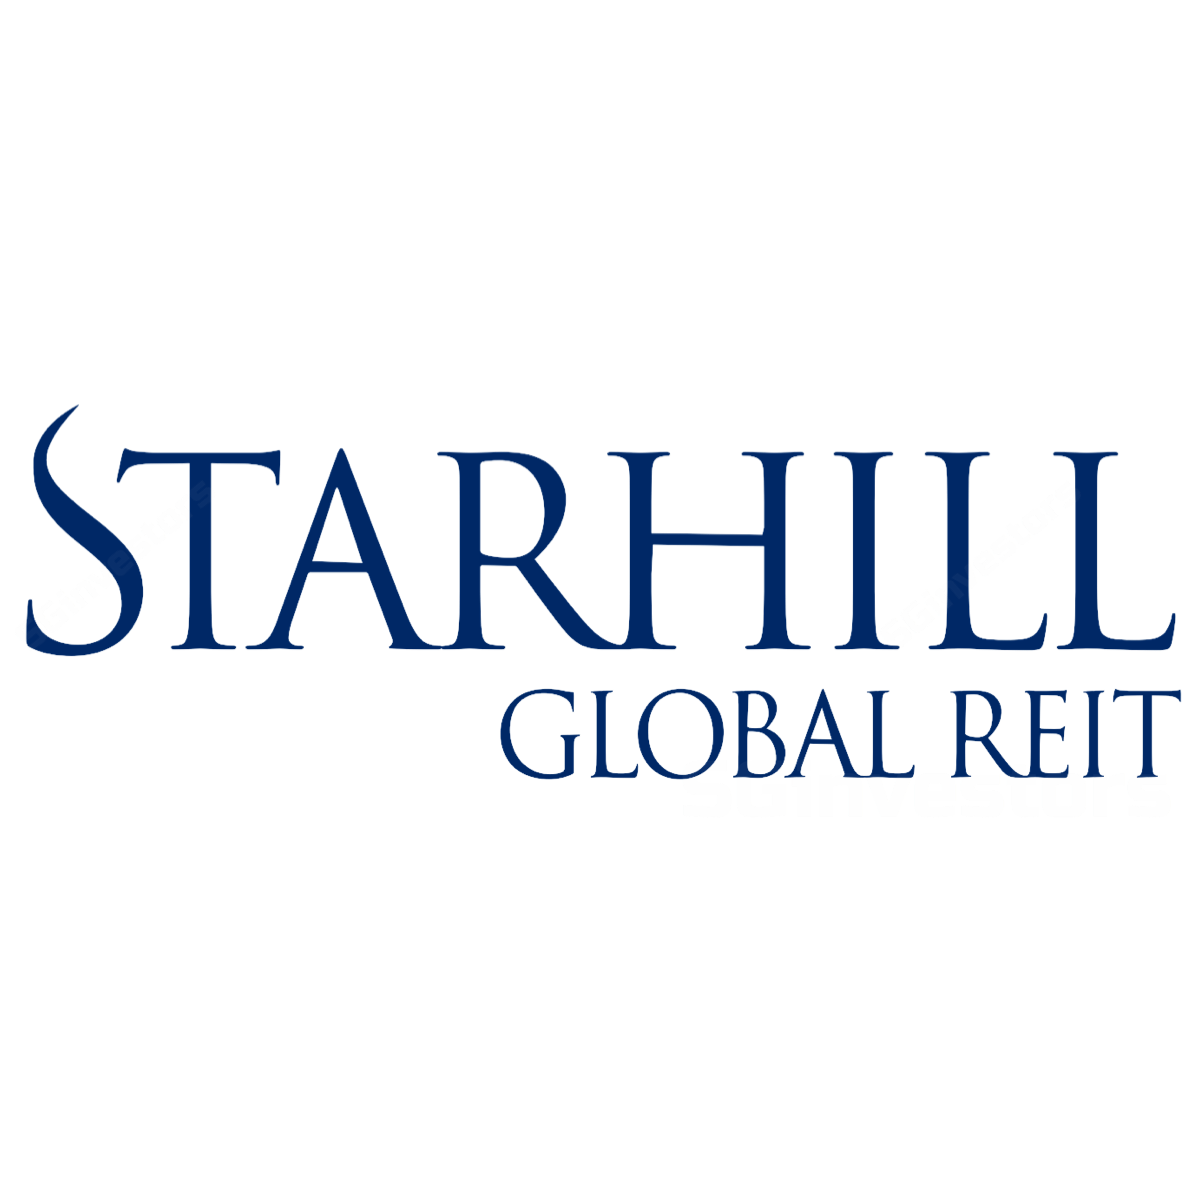 Starhill Global REIT - RHB Invest 2018-01-30: Transformation In Progress